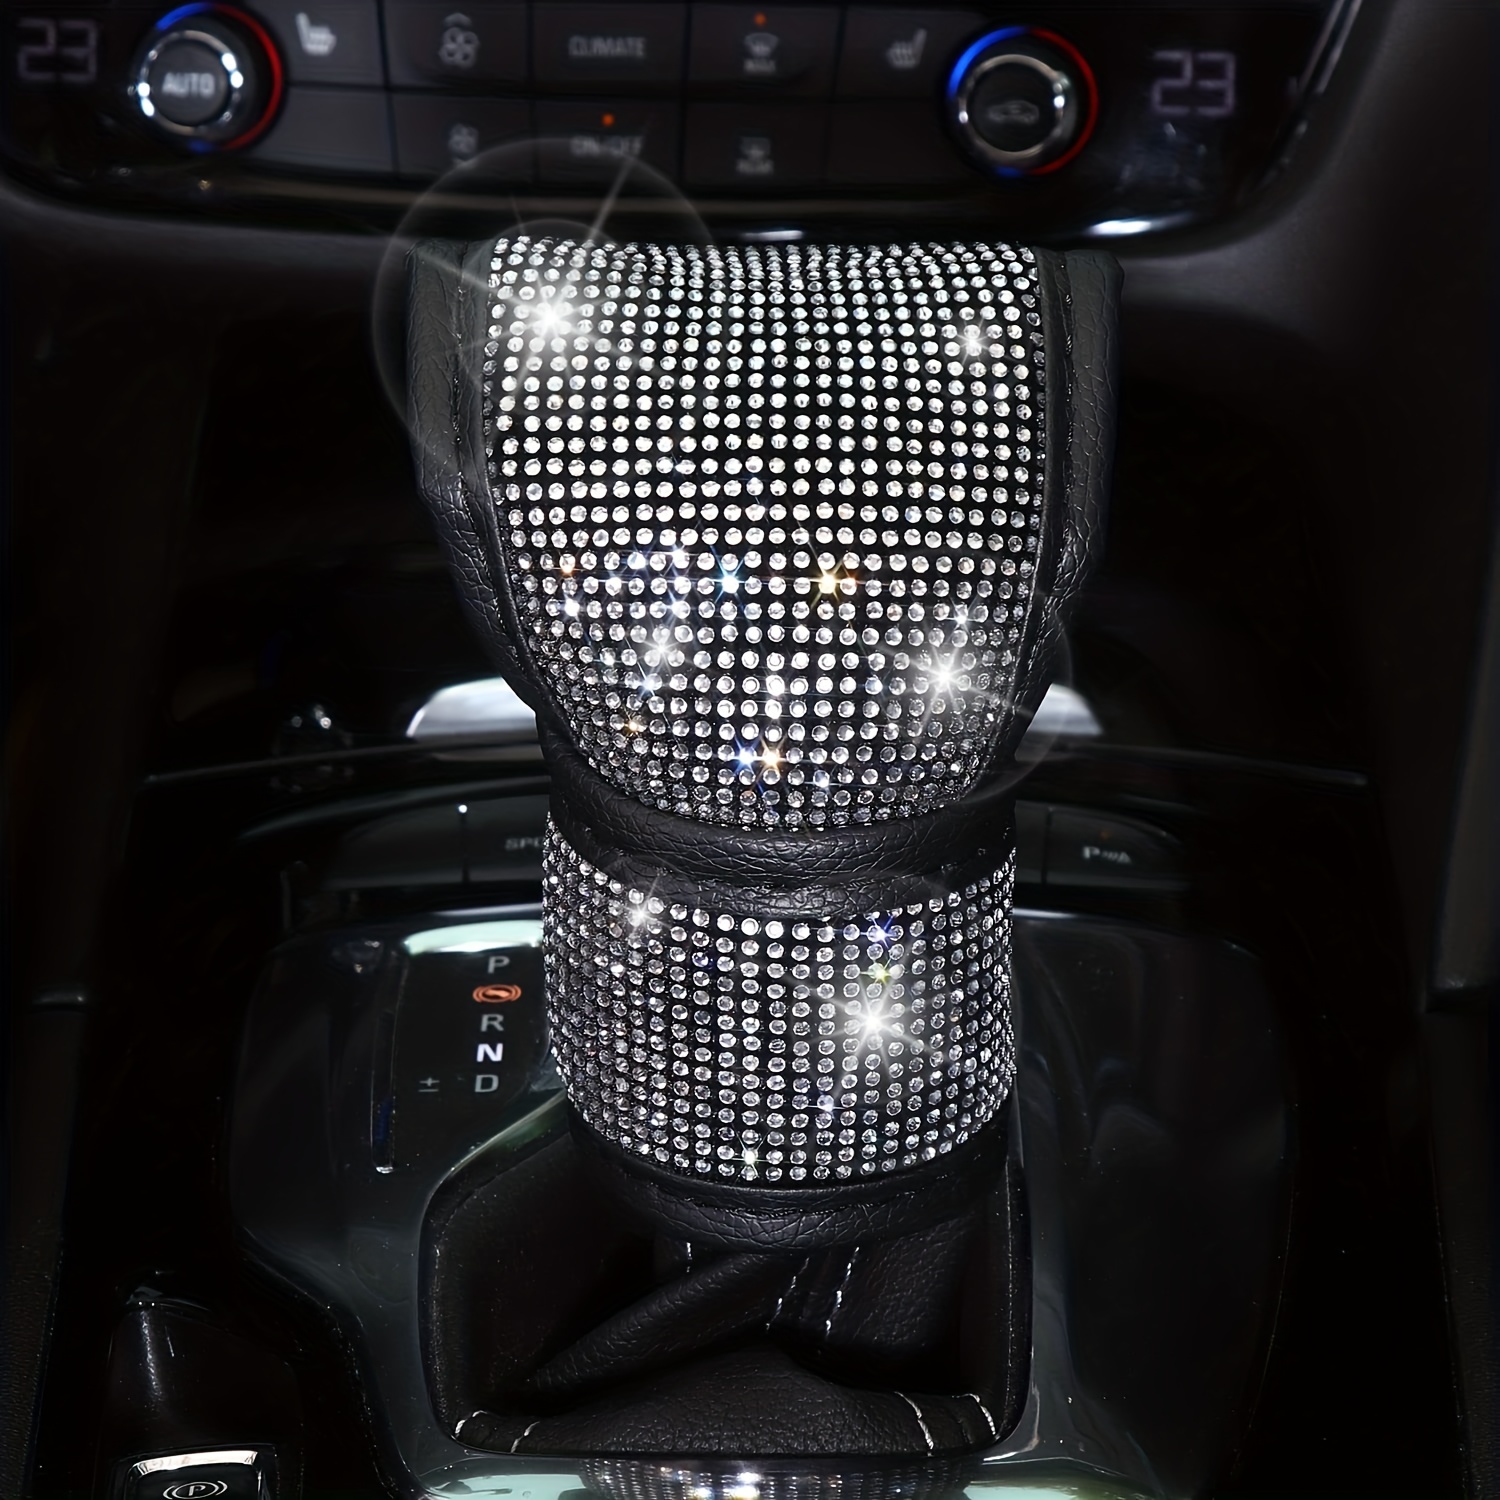 Walbest 1 Pack Bling Car Accessories for Women, Bling Steering Wheel Cover Set Seat Belt Shoulder Pads Crystal Ring Emblem Sticker Glitter Gear Shift